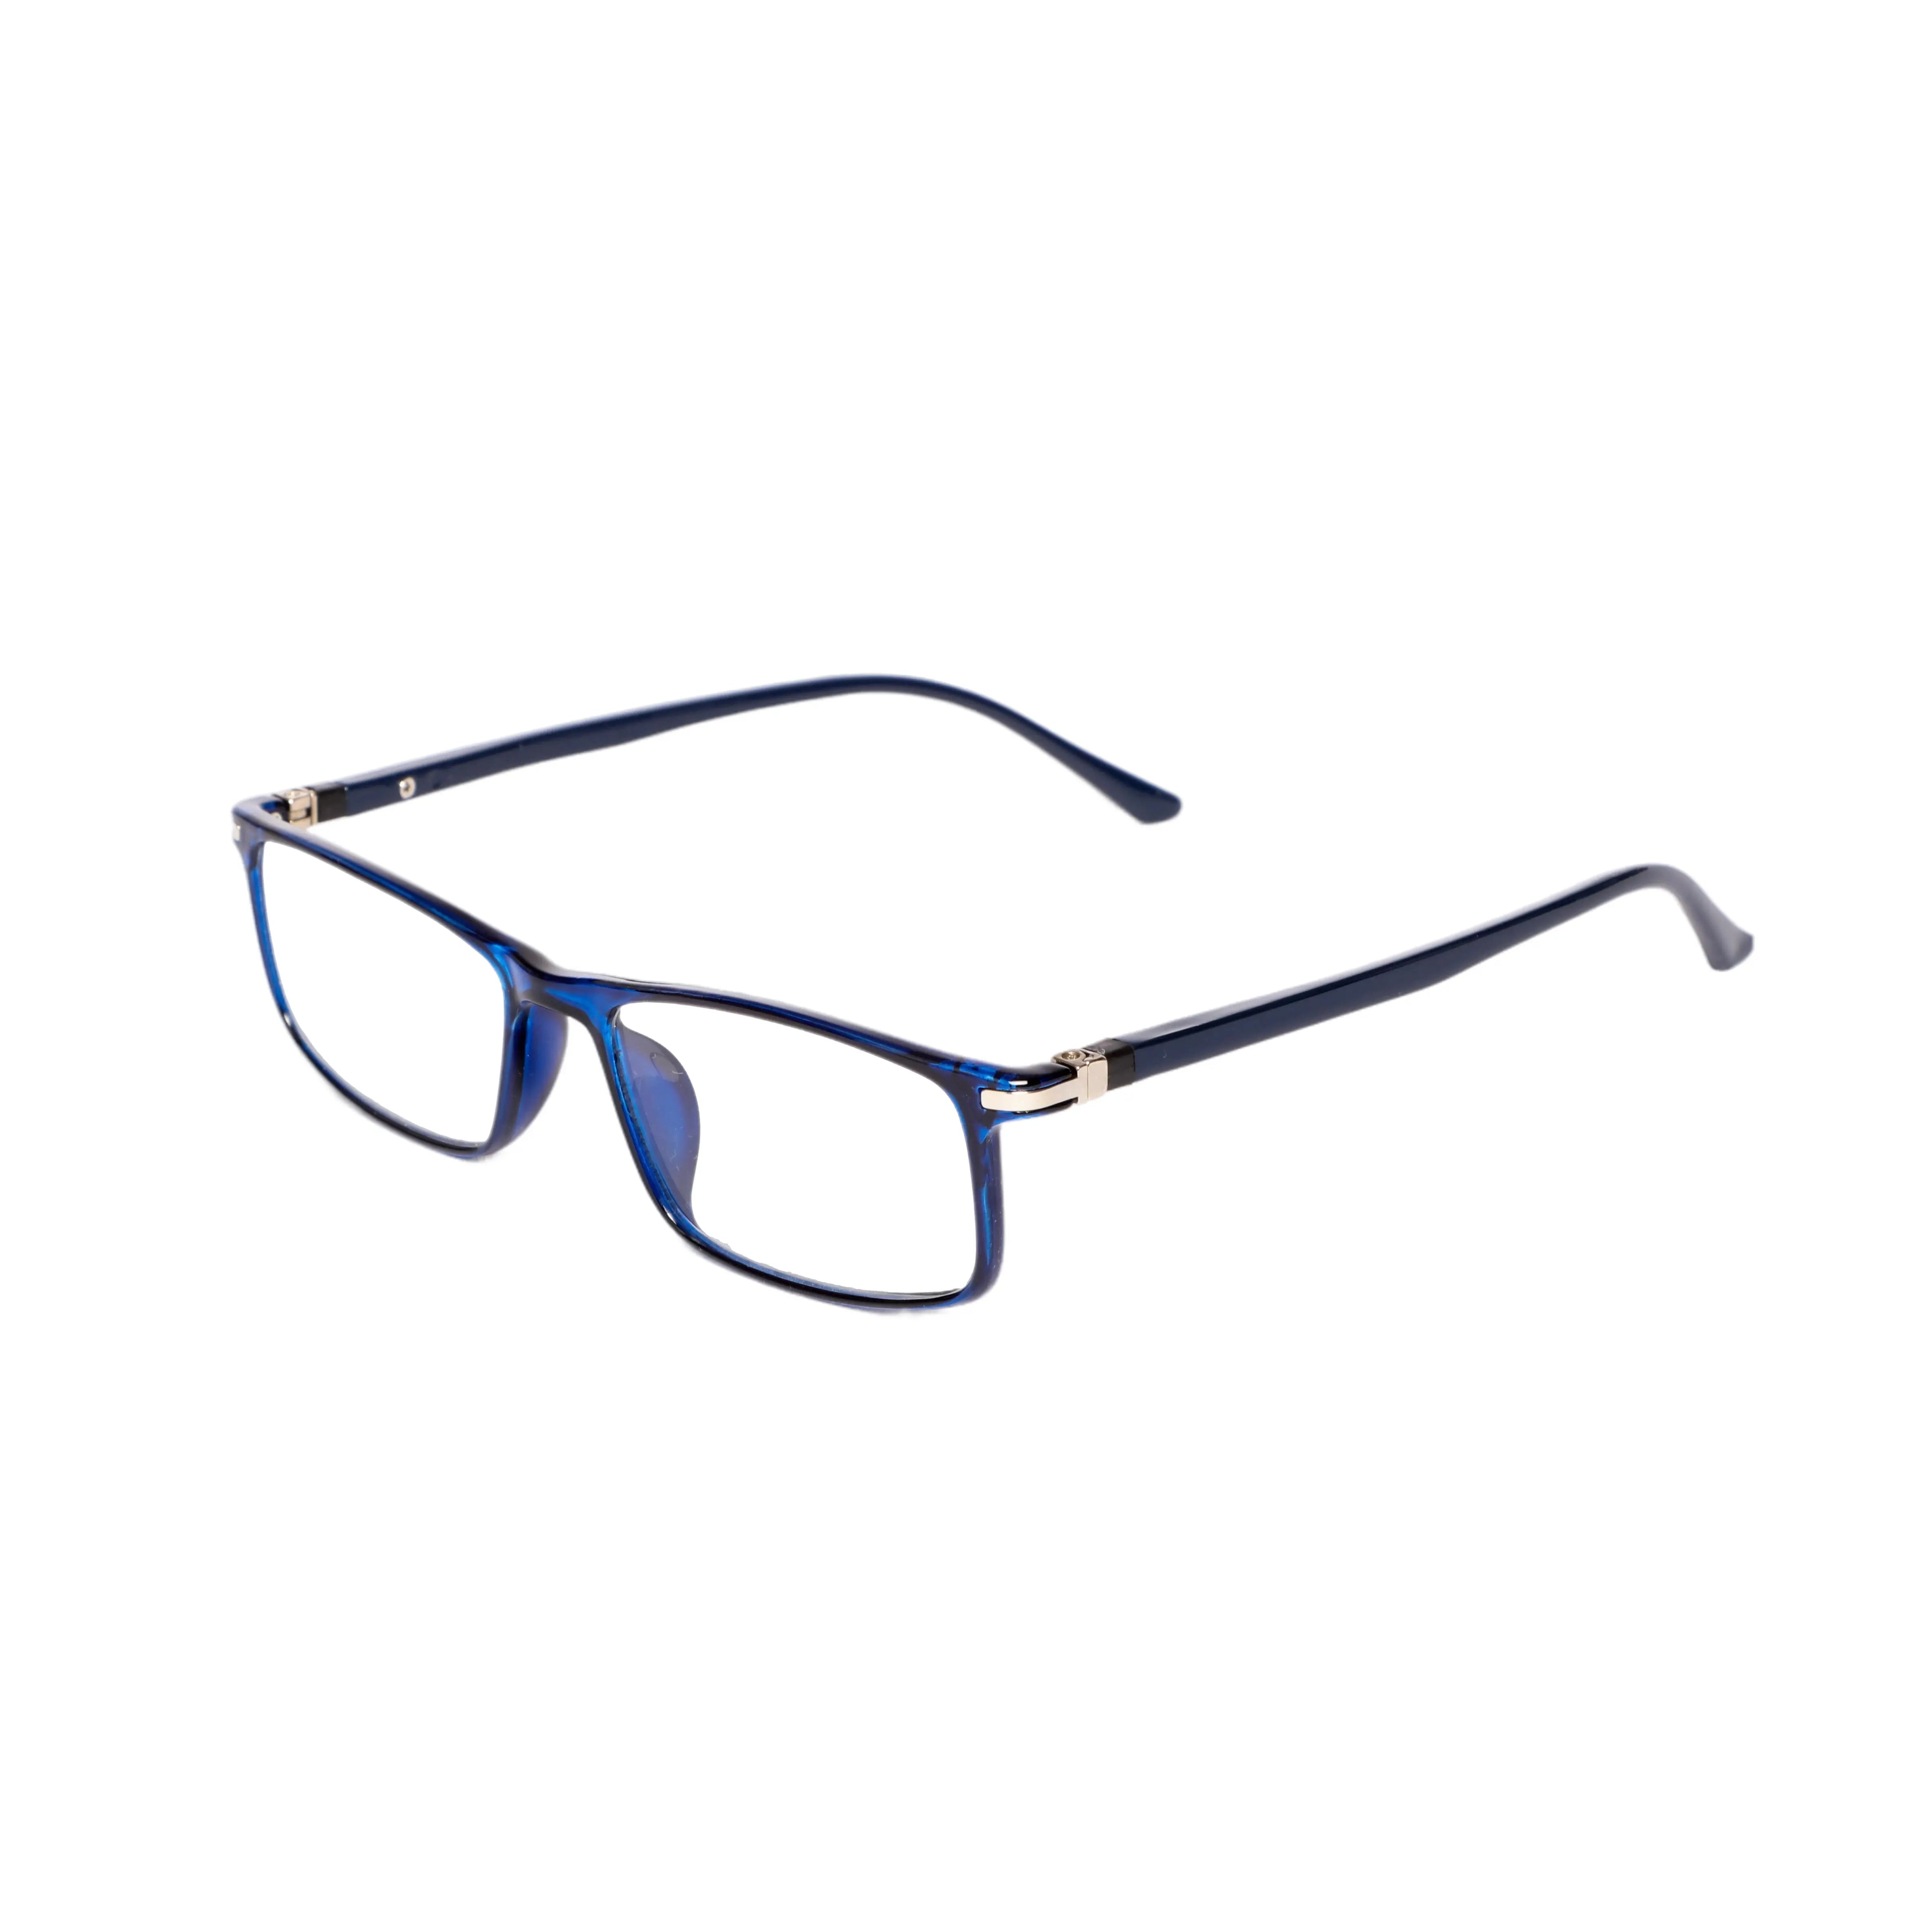 Optic Daddy Full Rim Reading Eyeglasses - Premium Eyeglasses from Optic Daddy - Just Rs. 800! Shop now at Laxmi Opticians